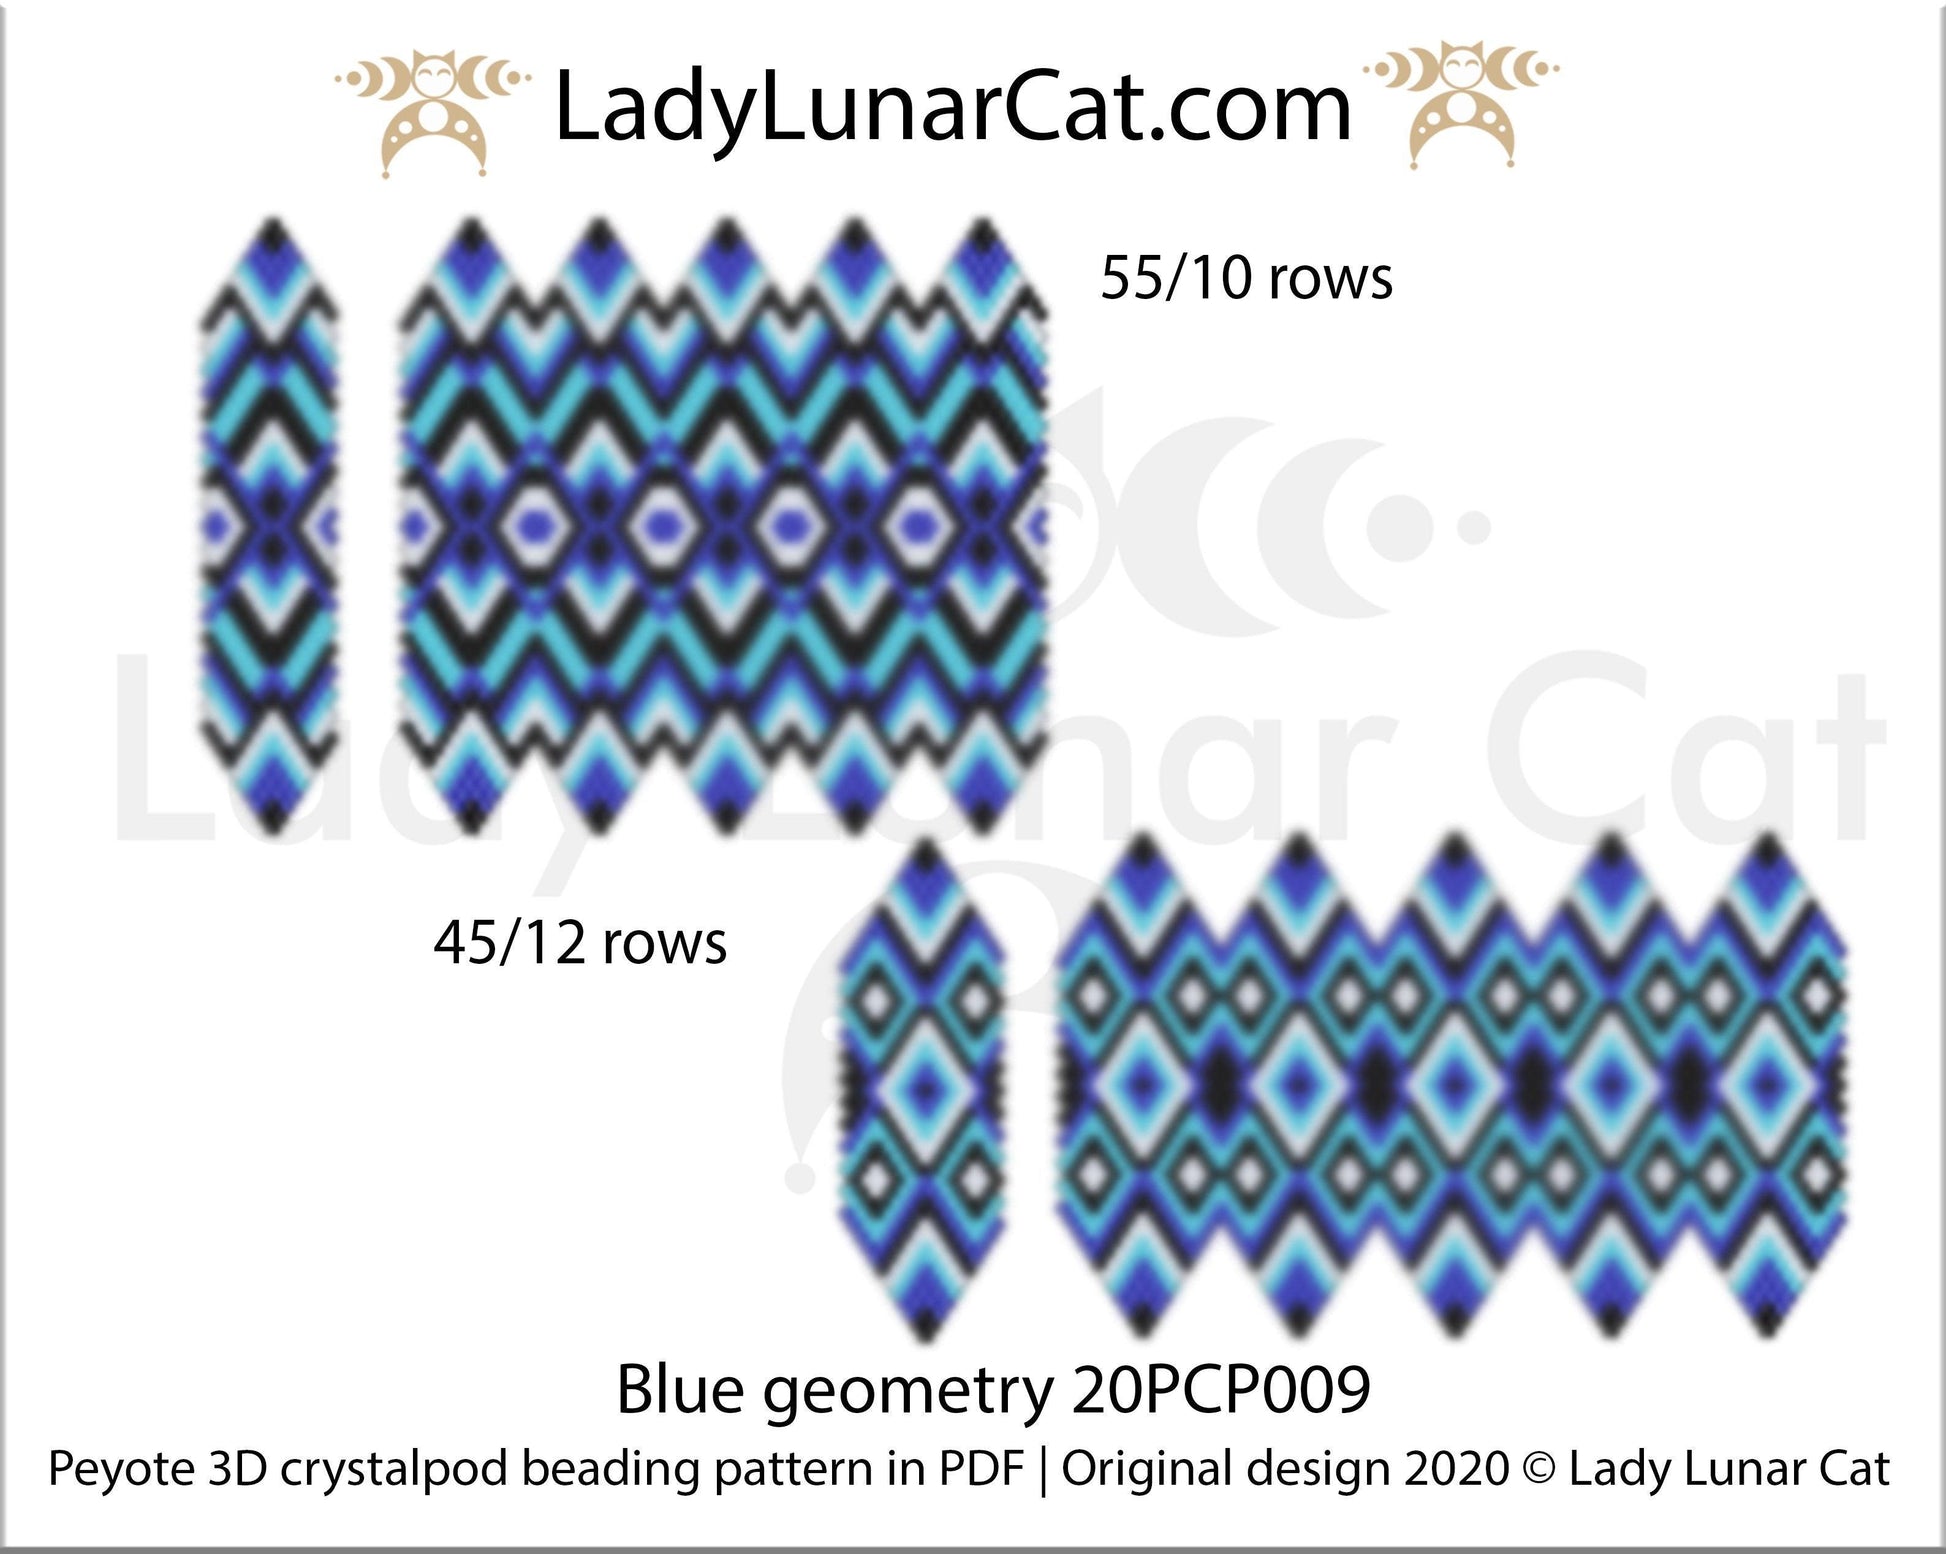 3d peyote pod pattern or crystalpod pattern for beading Blue geometry 20PCP009 LadyLunarCat